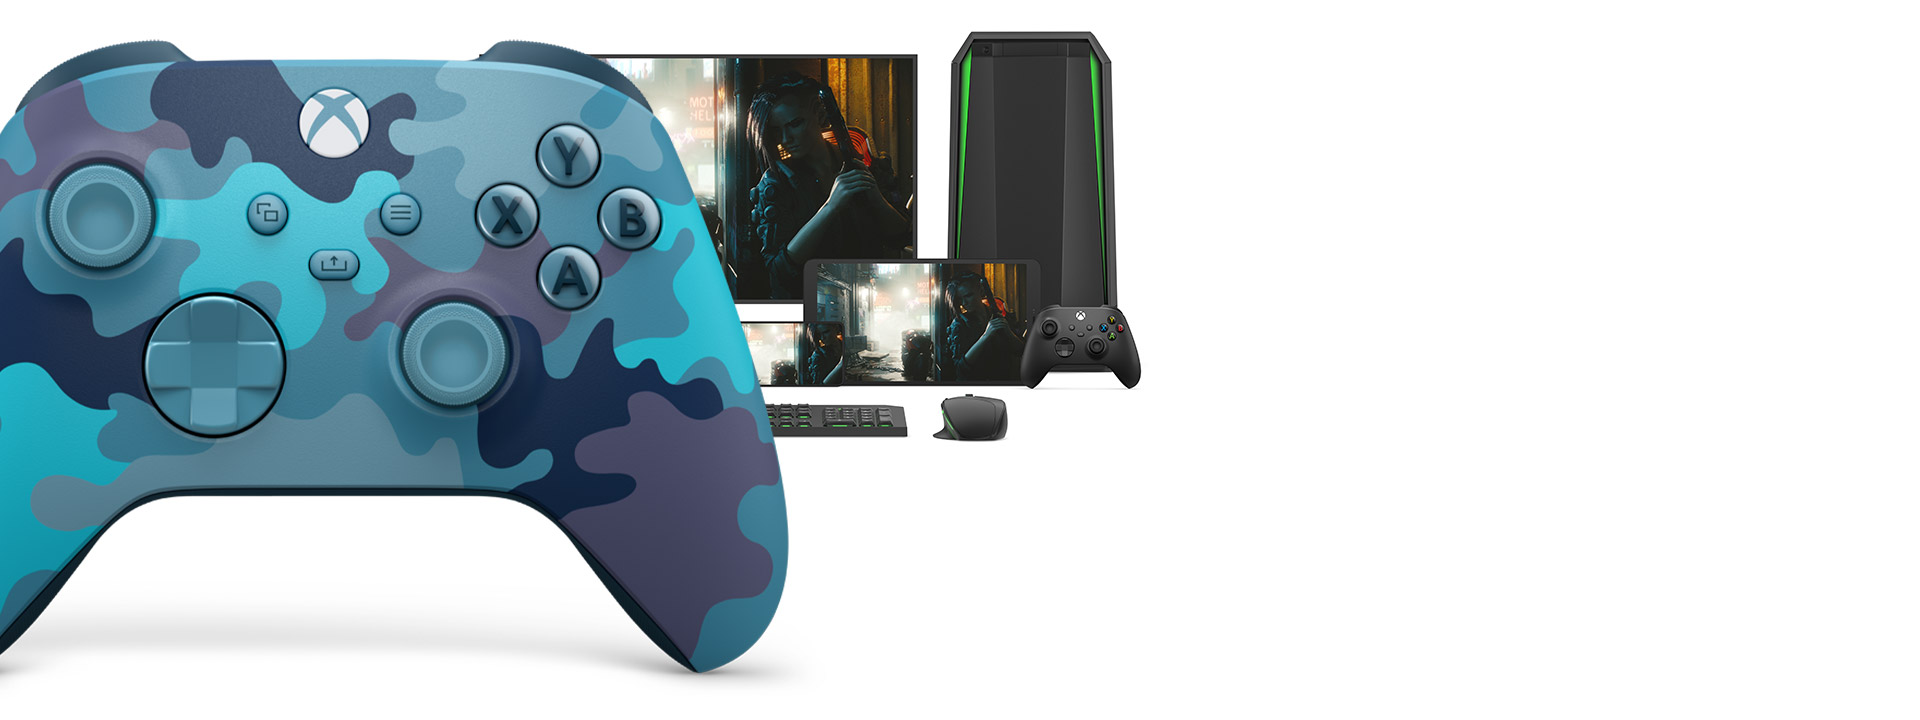 Trådløs Xbox-kontroller mineral camo med datamaskin, TV og en Xbox Series S